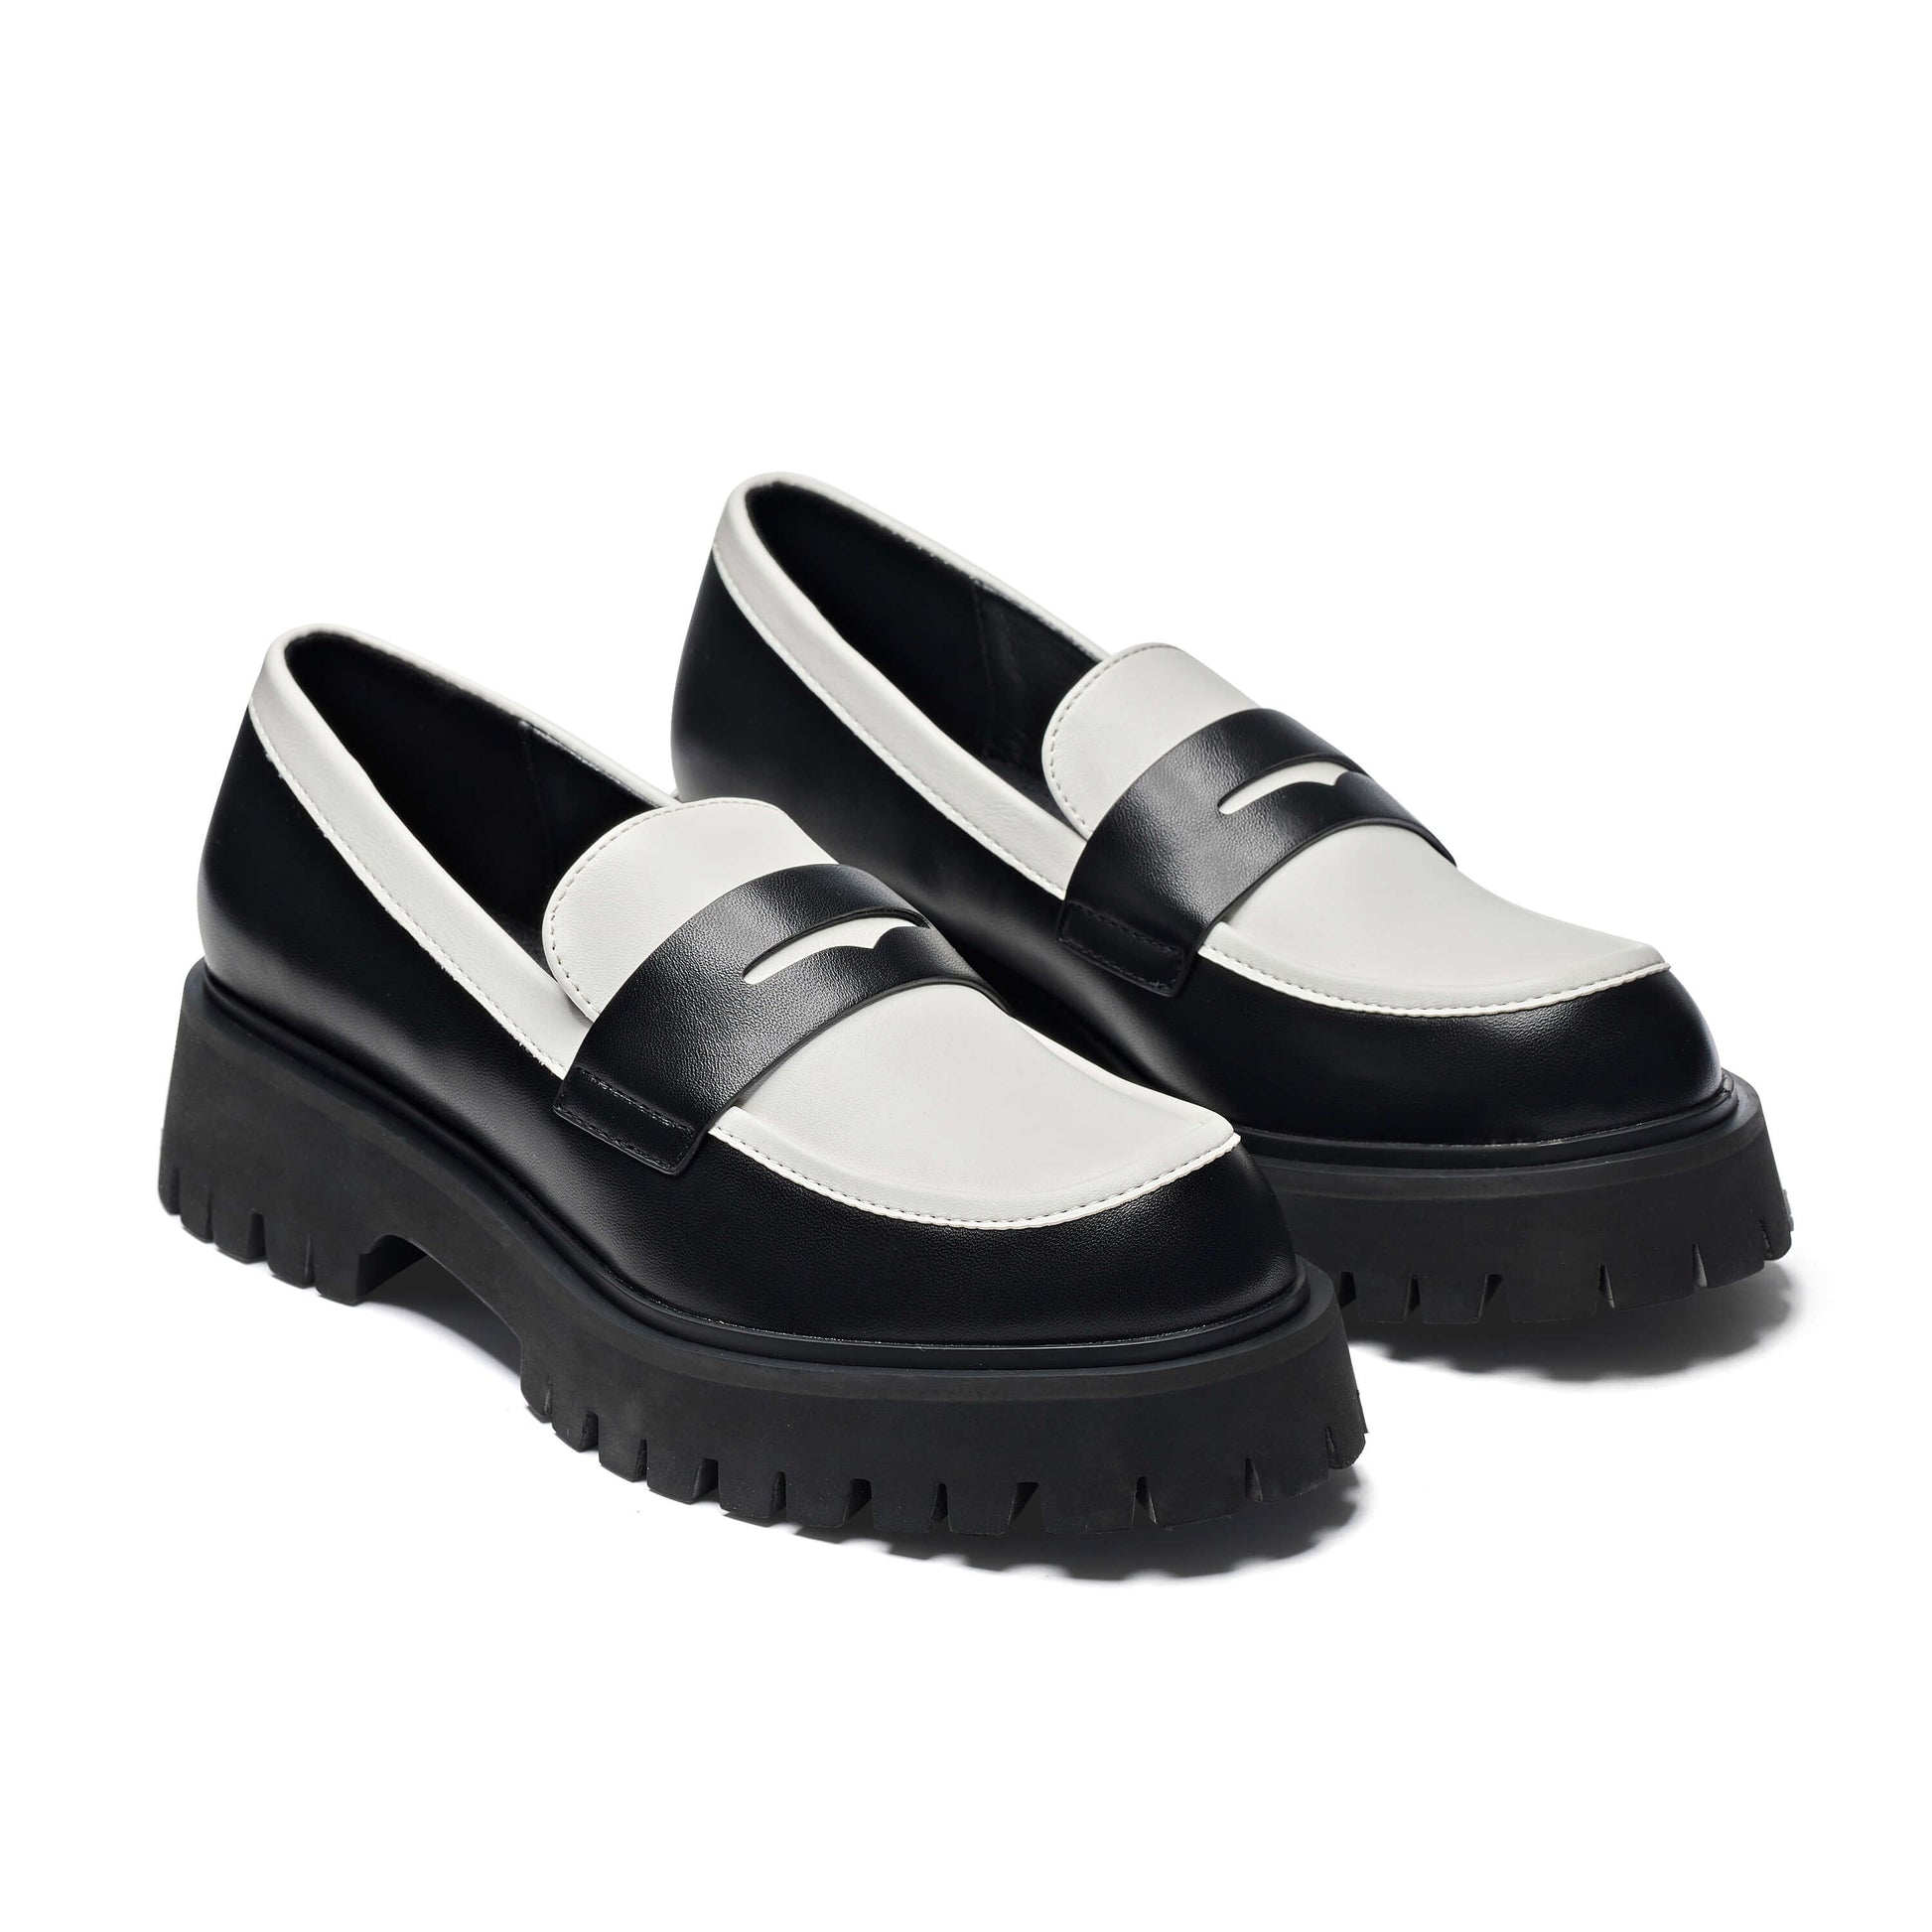 Birch Monochrome Loafers - Shoes - KOI Footwear - Multi - Three-Quarter View